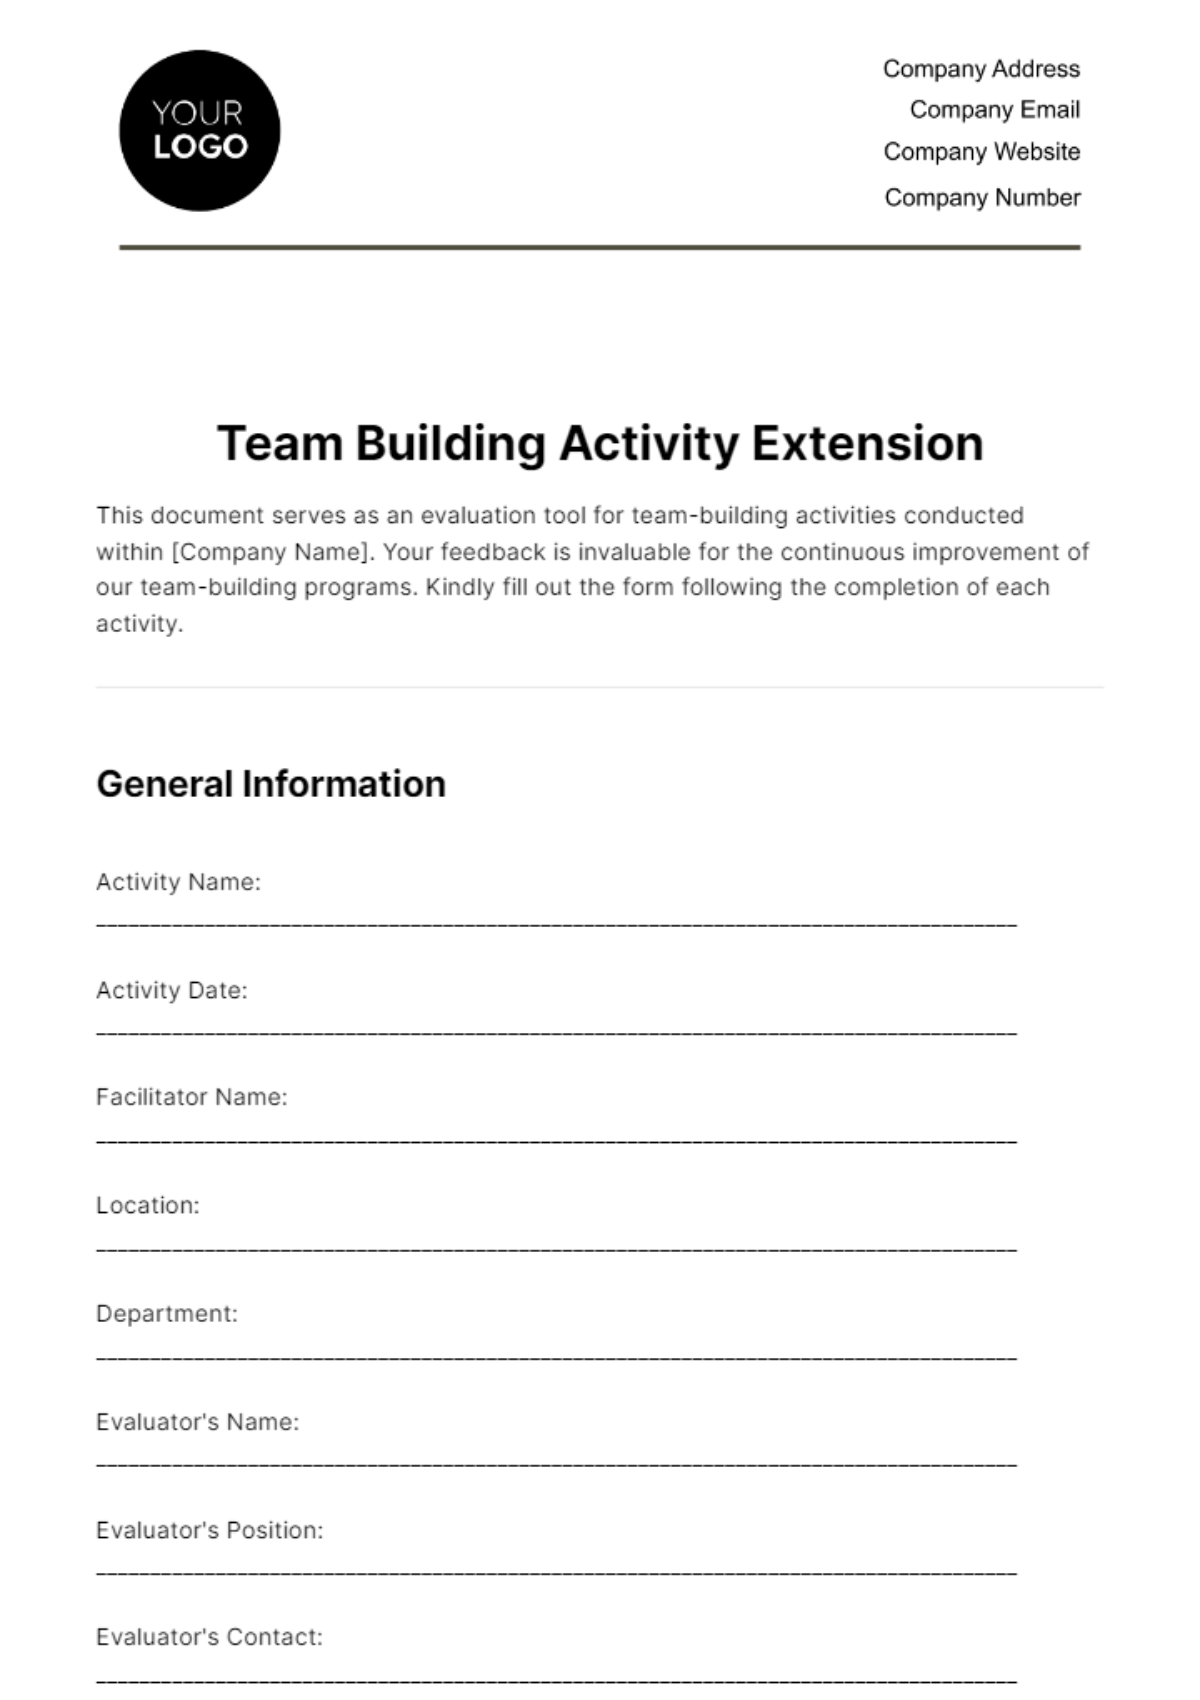 Team Building Activity Evaluation HR Template